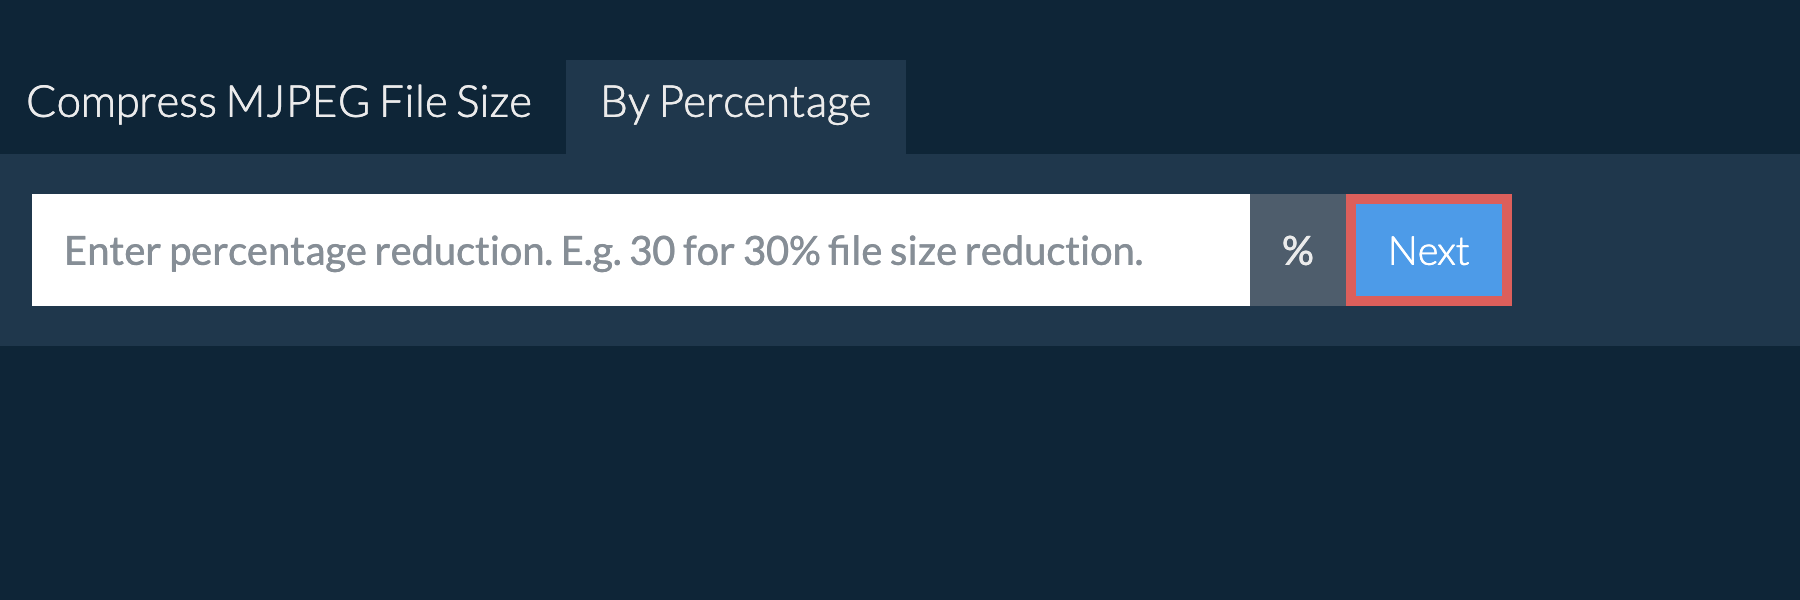 Reduce mjpeg By Percentage